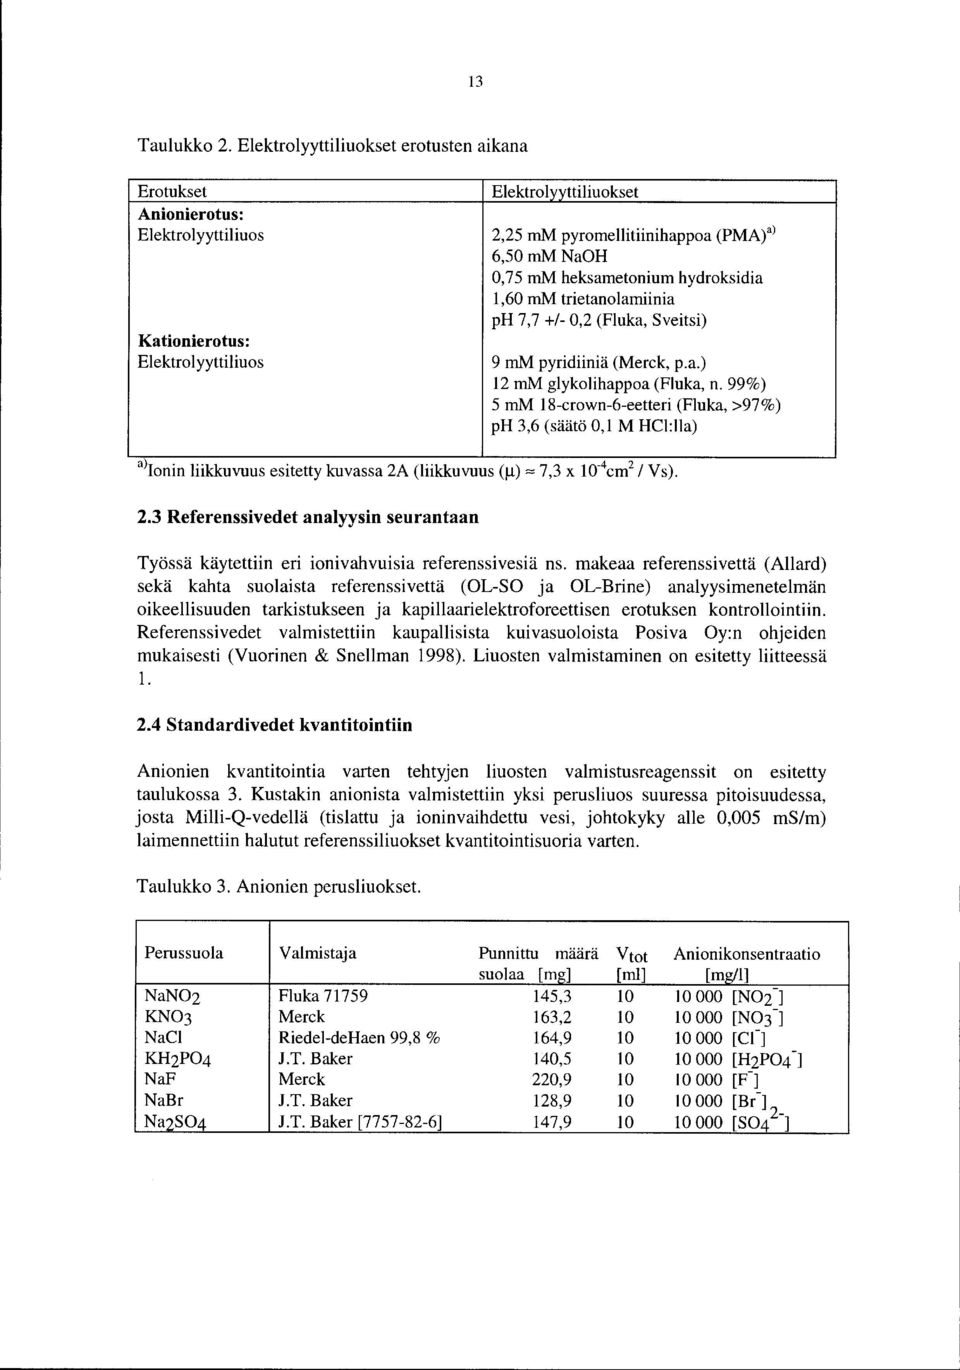 hydroksidia 1,6 mm trietanolamiinia ph 7,7 +1-,2 (Flka, Sveitsi) 9 mm pyridiiniä (Merck, p.a.) 12 mm glykolihappoa (Flka, n.